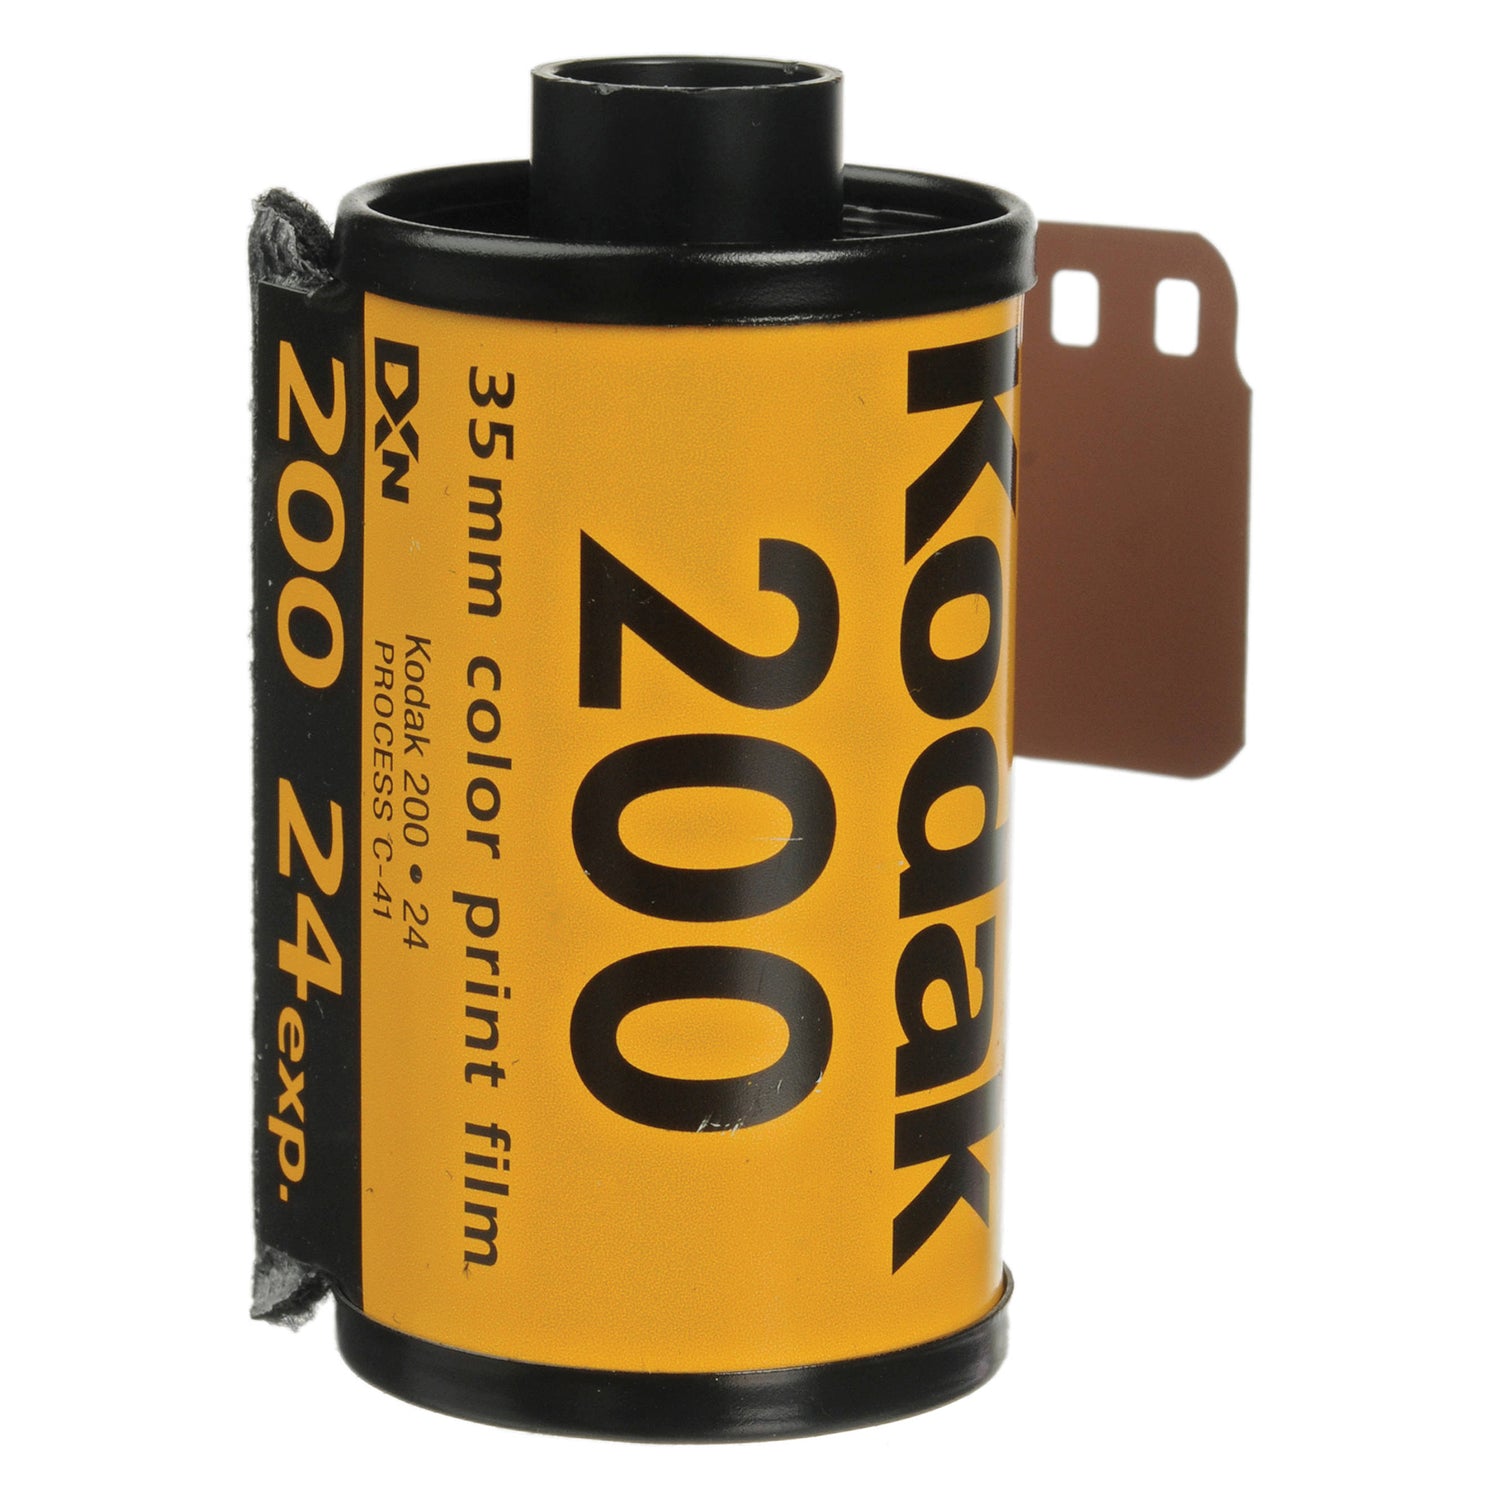 Kodak Gold + Battery add on